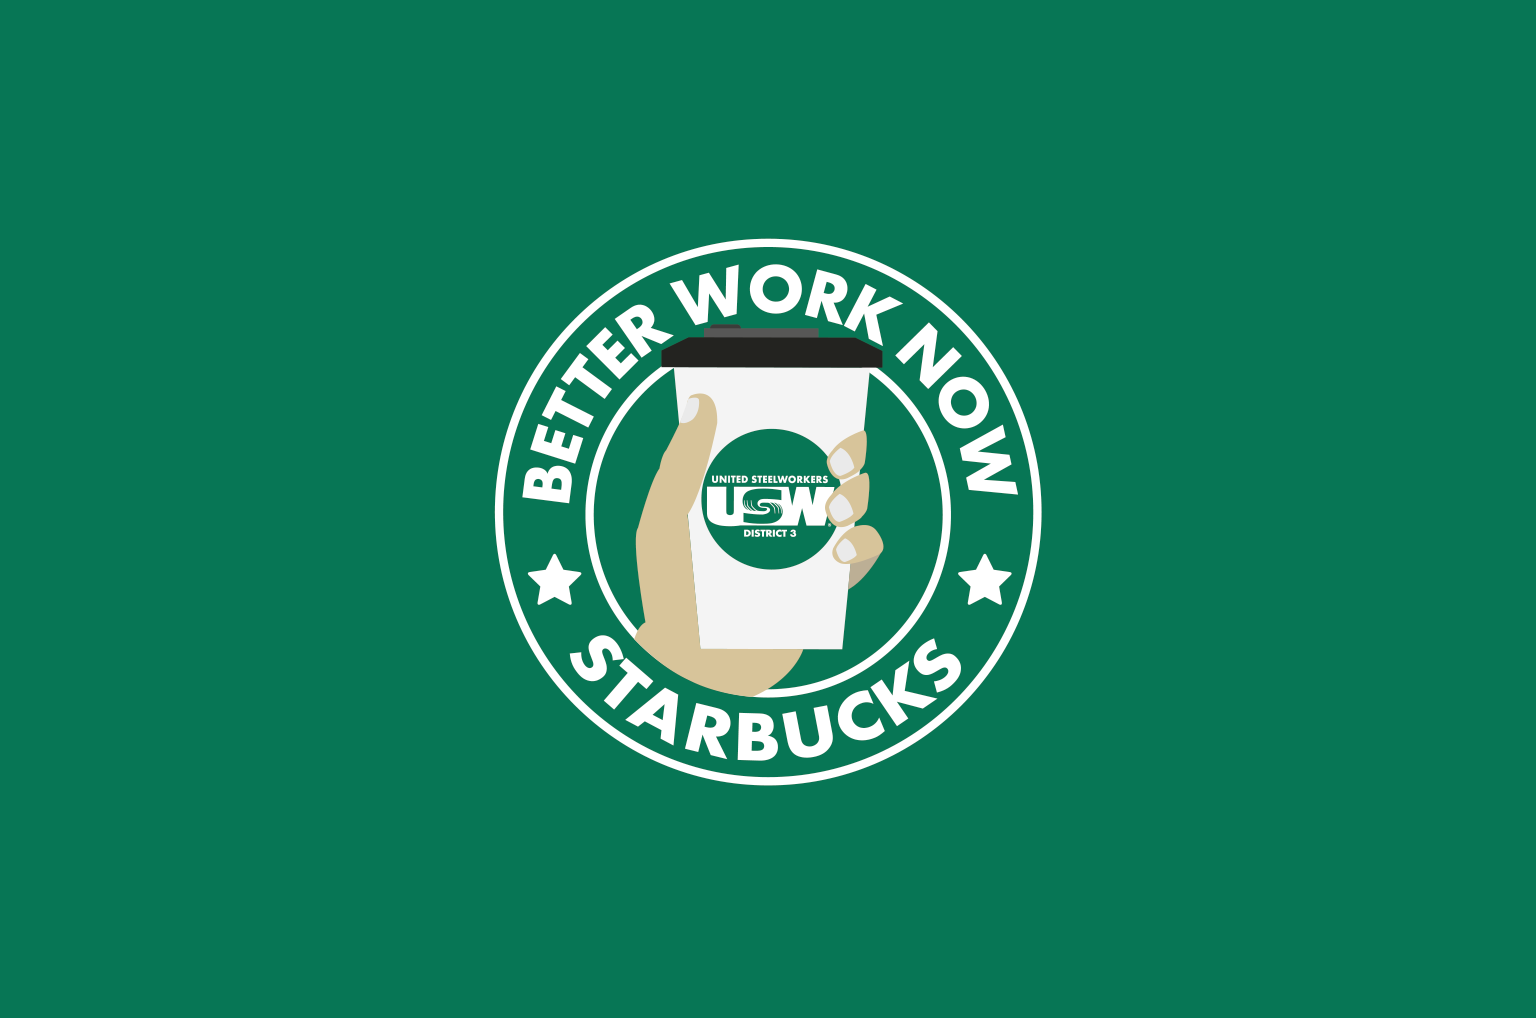 Better Work Now Starbucks – USW District 3